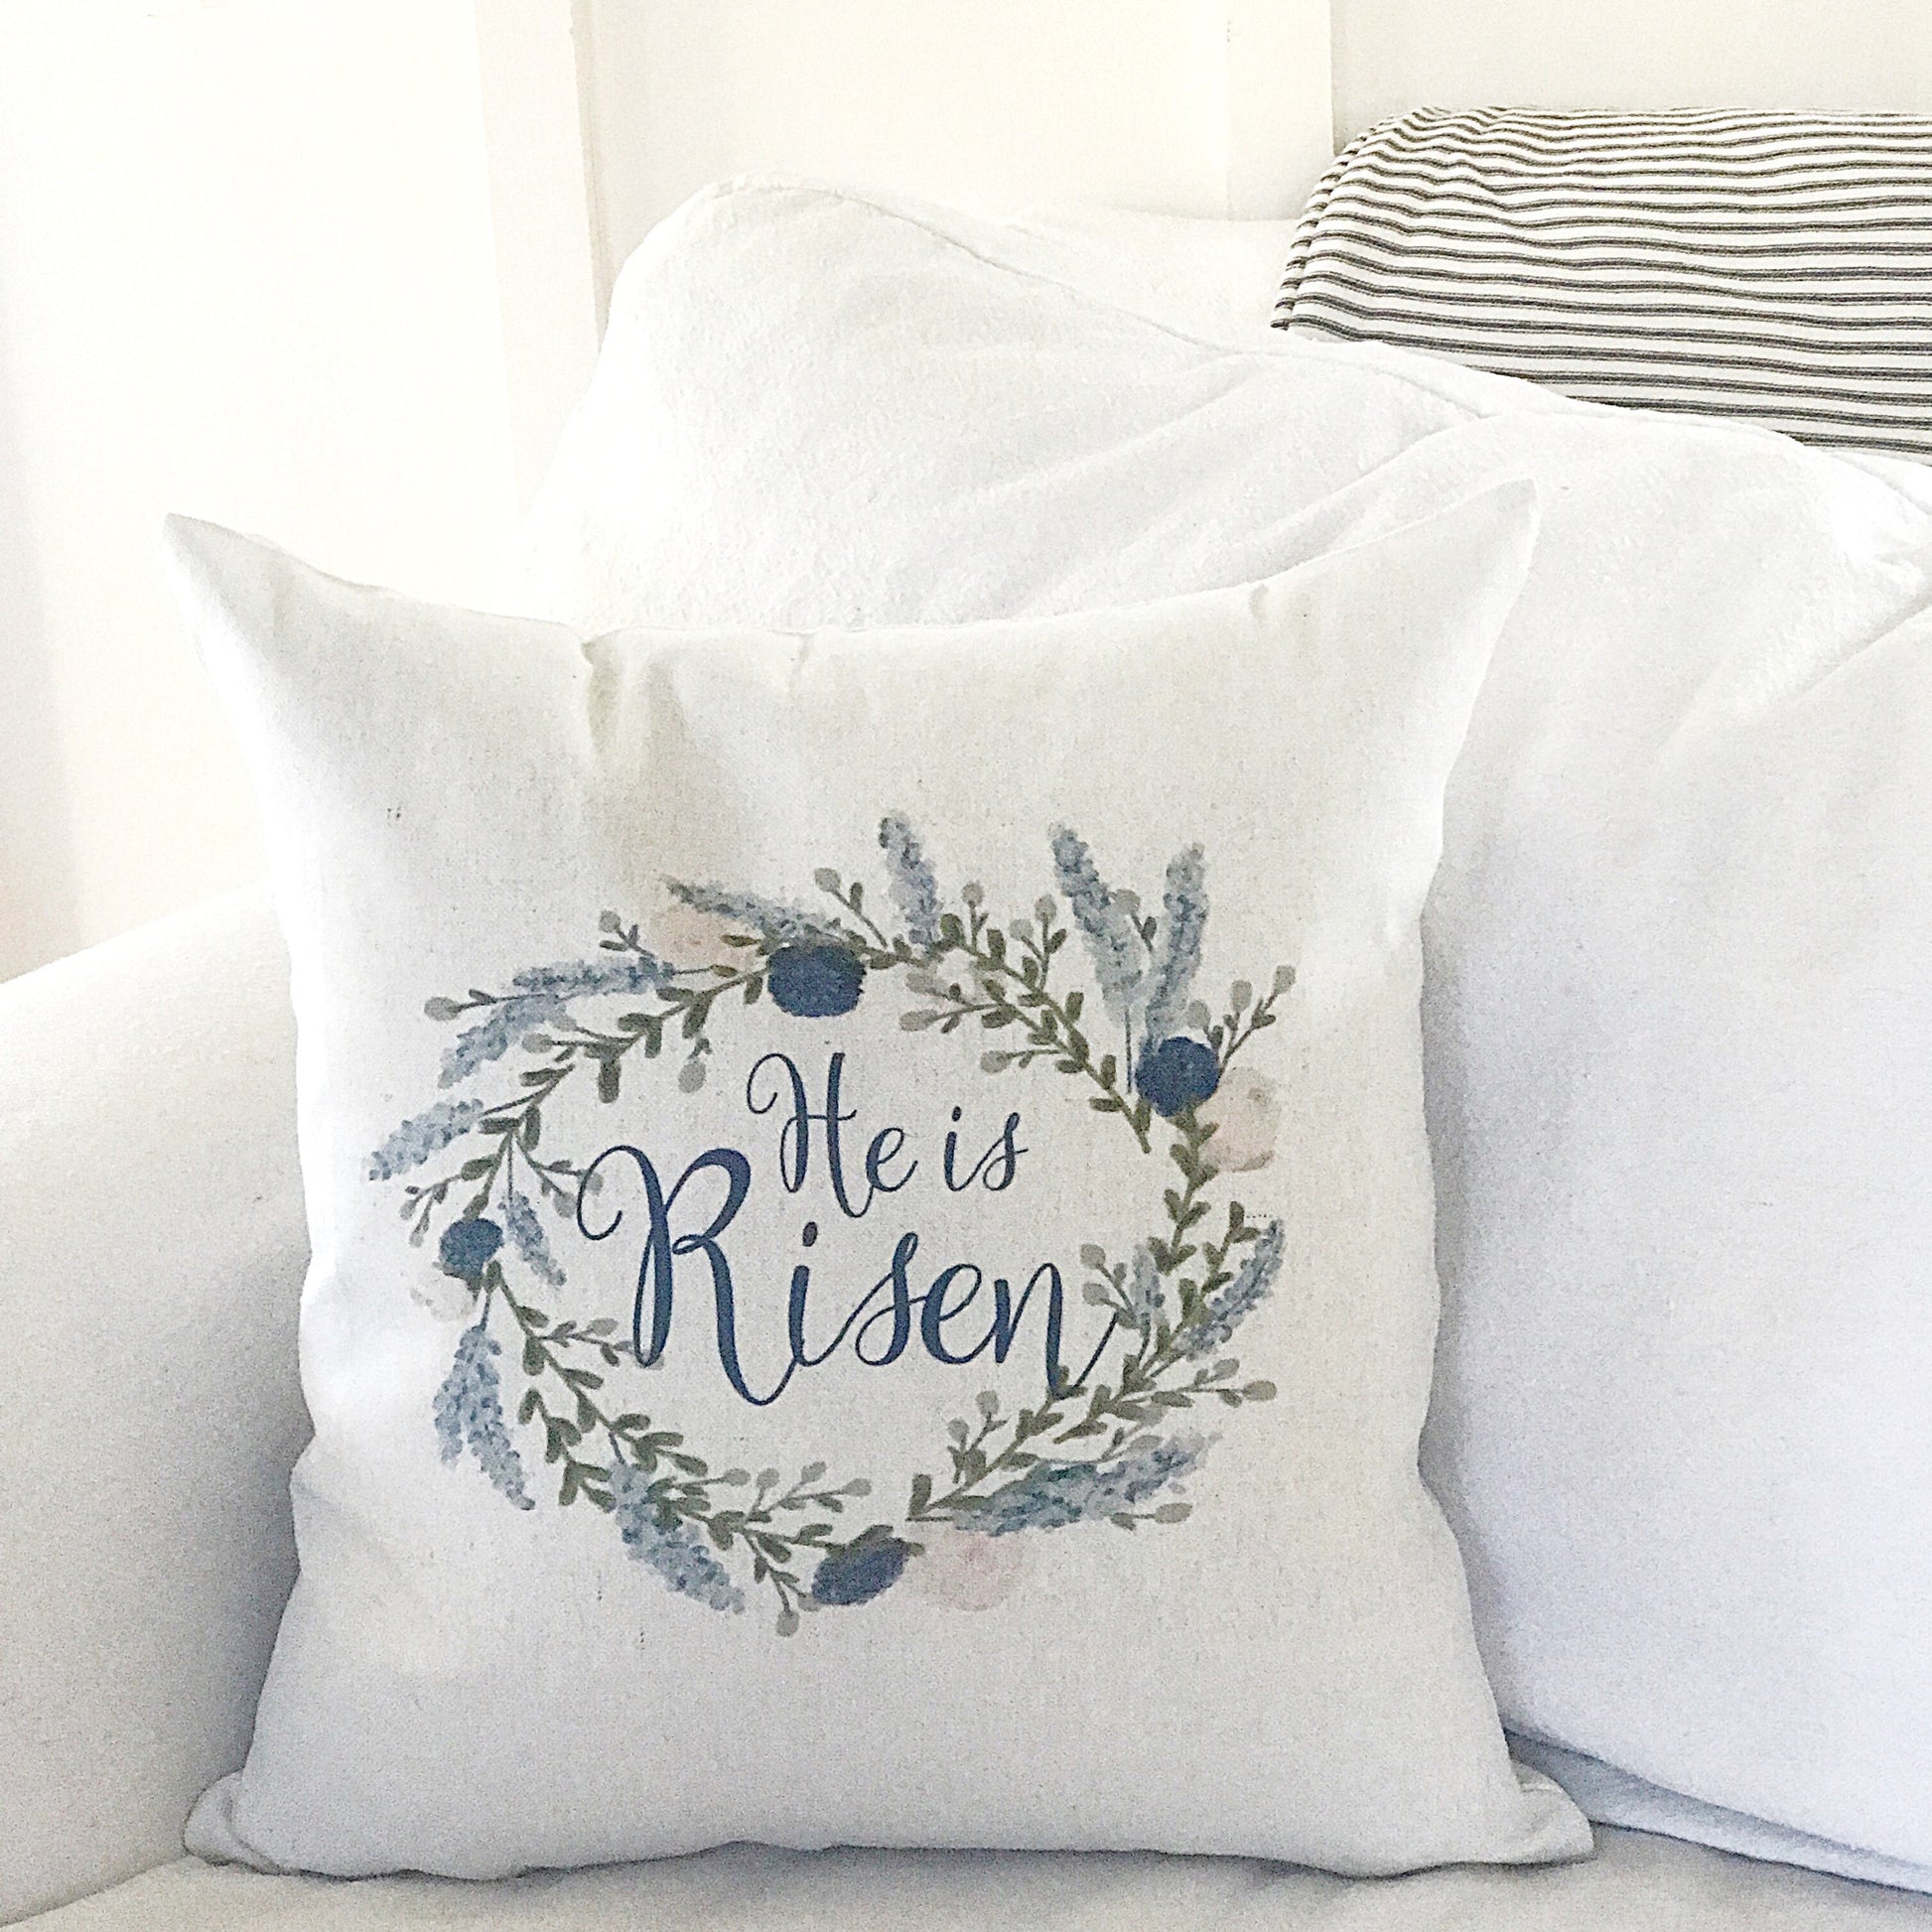 He is Risen Blue Watercolor Floral Wreath Pillow Cover - Returning Grace Designs